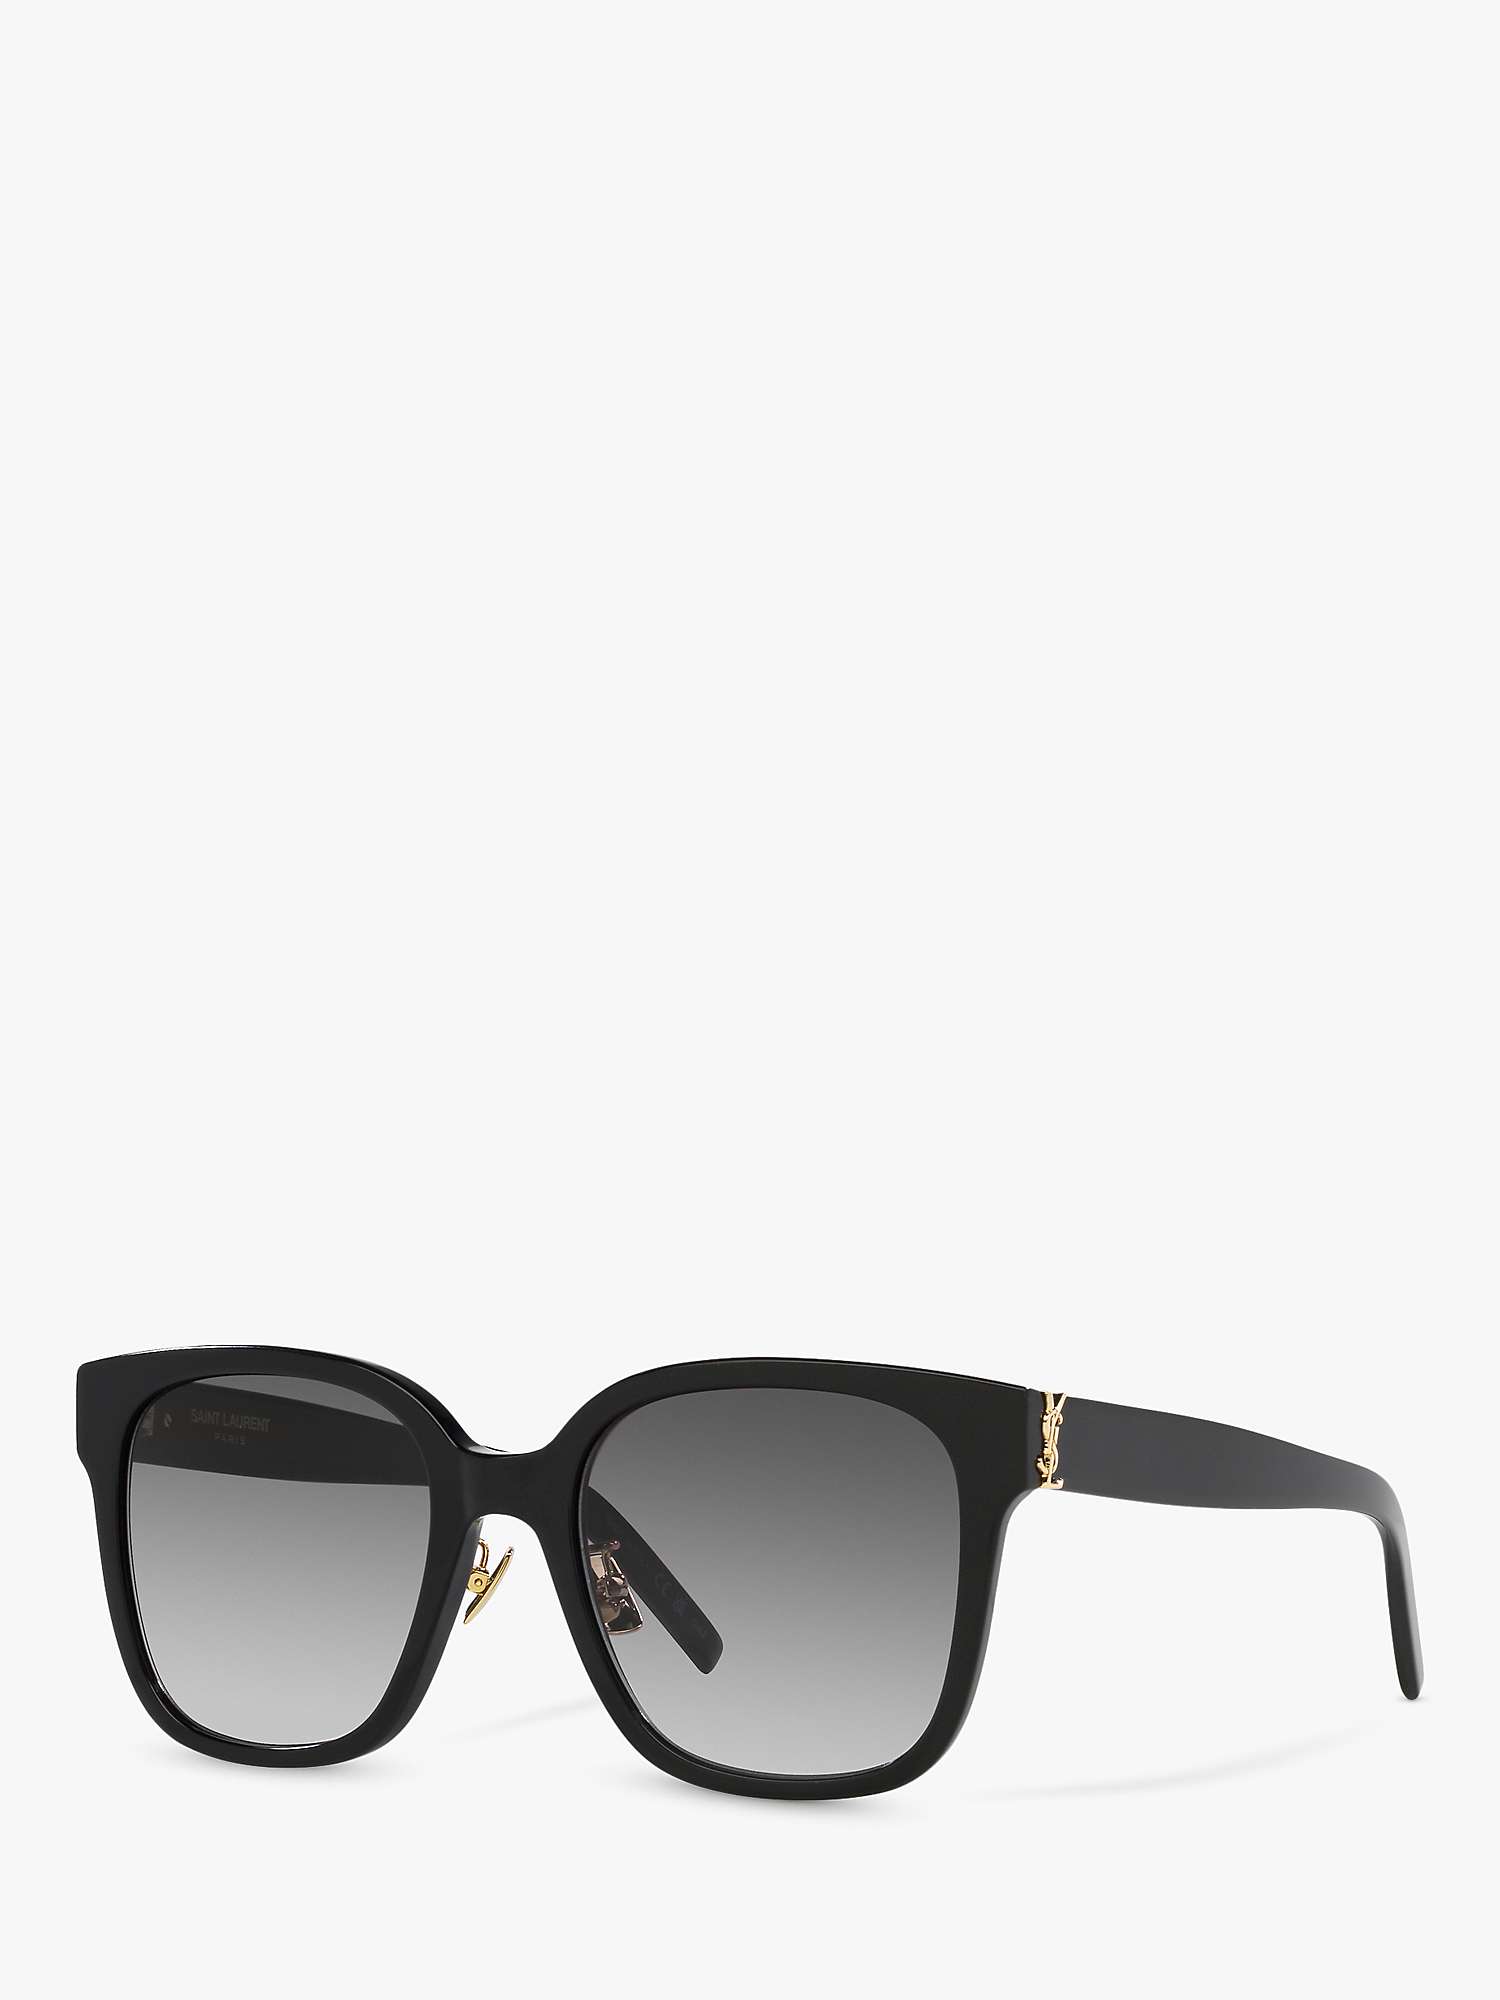 Buy Yves Saint Laurent YS000465 Women's Square Sunglasses, Black Online at johnlewis.com